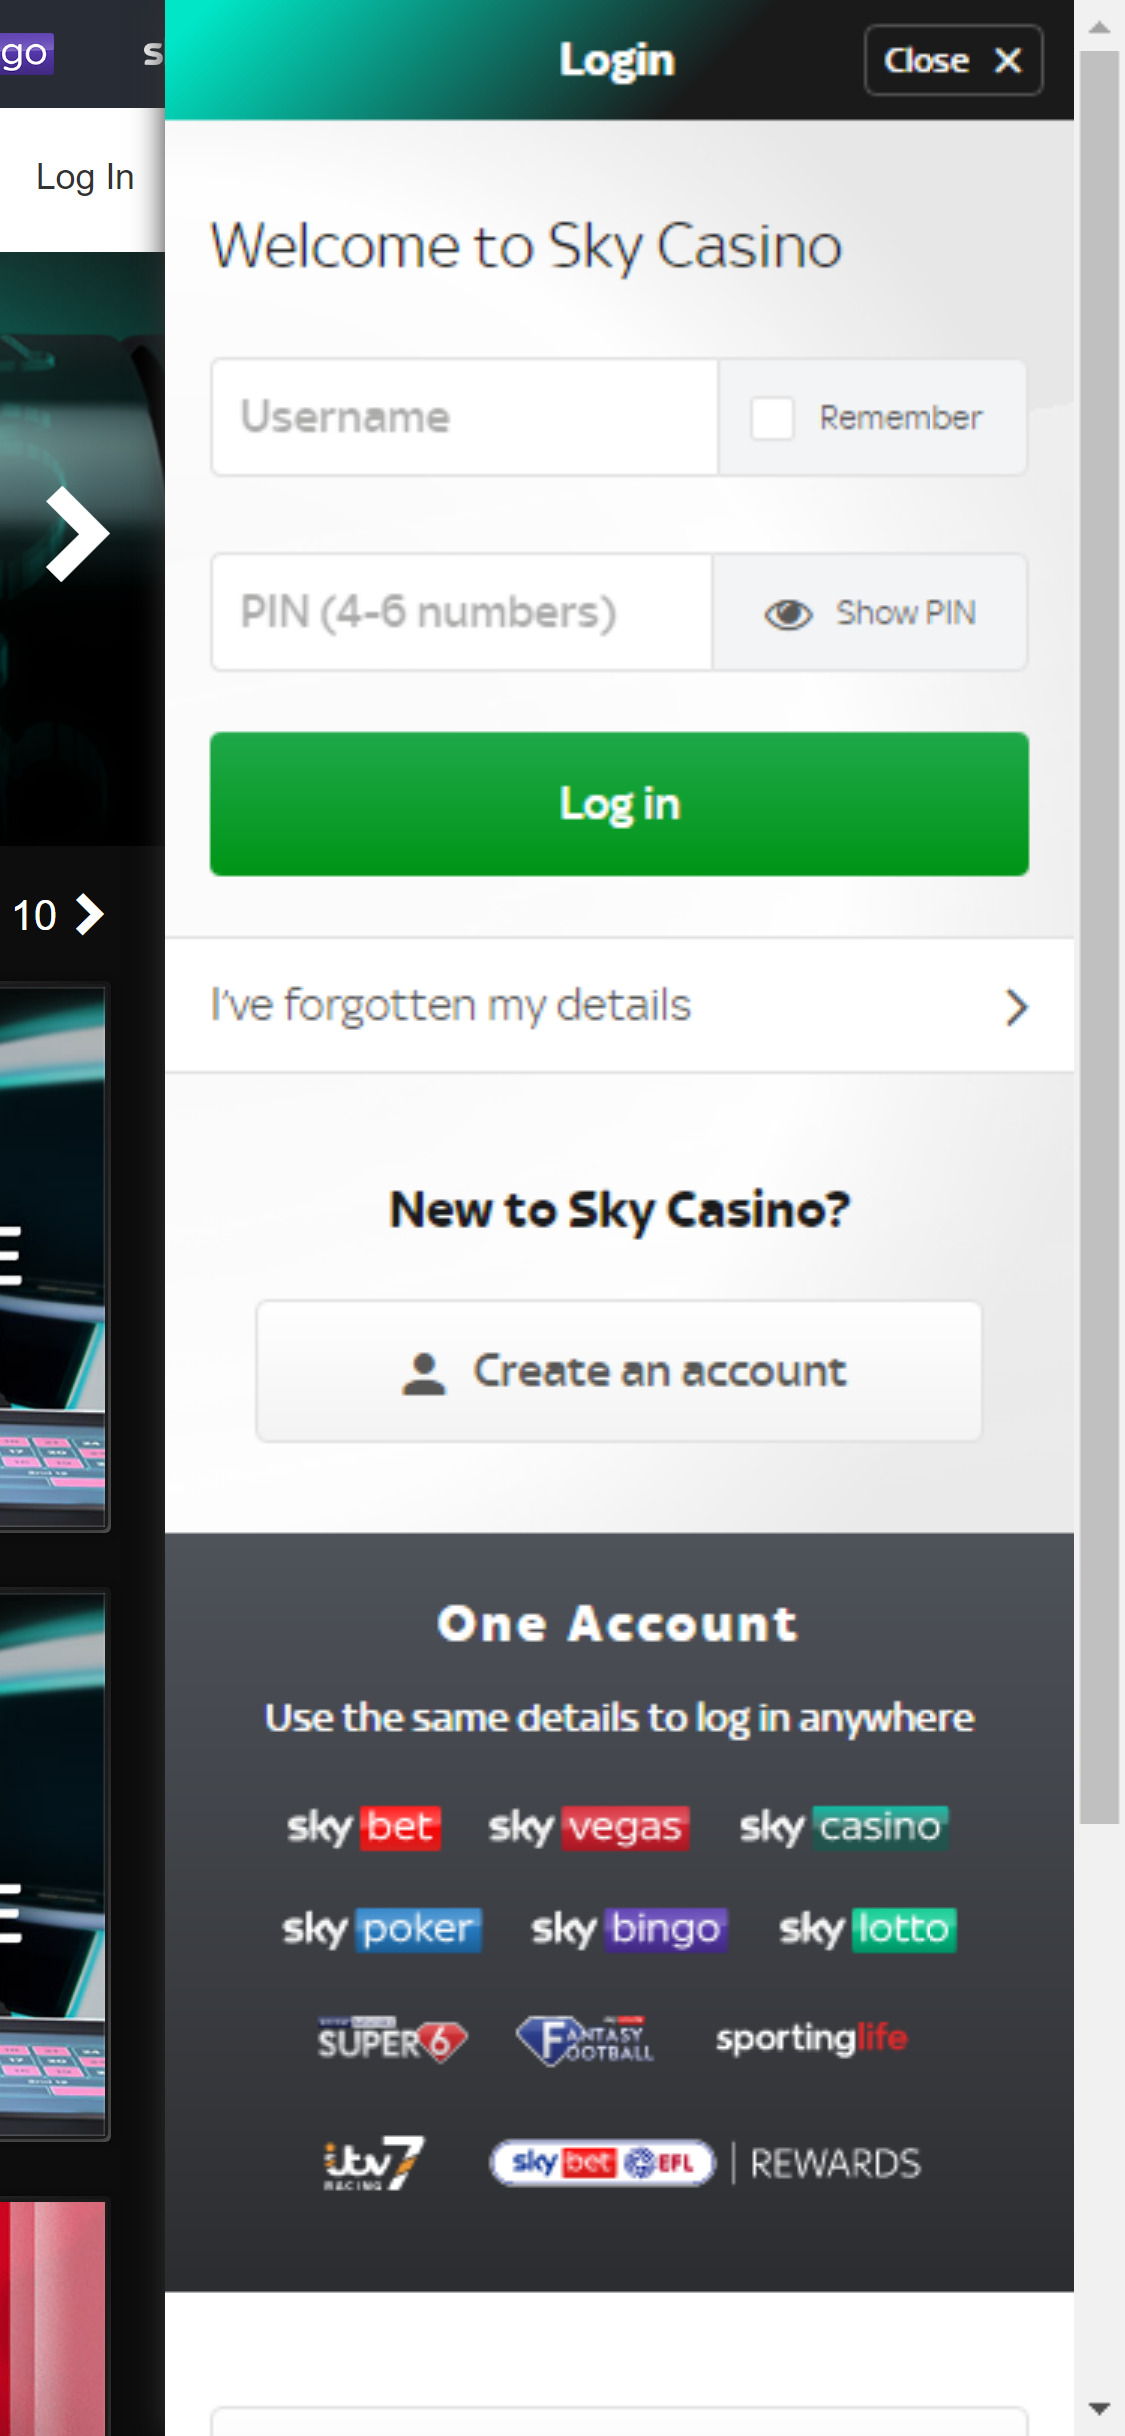 Sky Casino Mobile Login Review